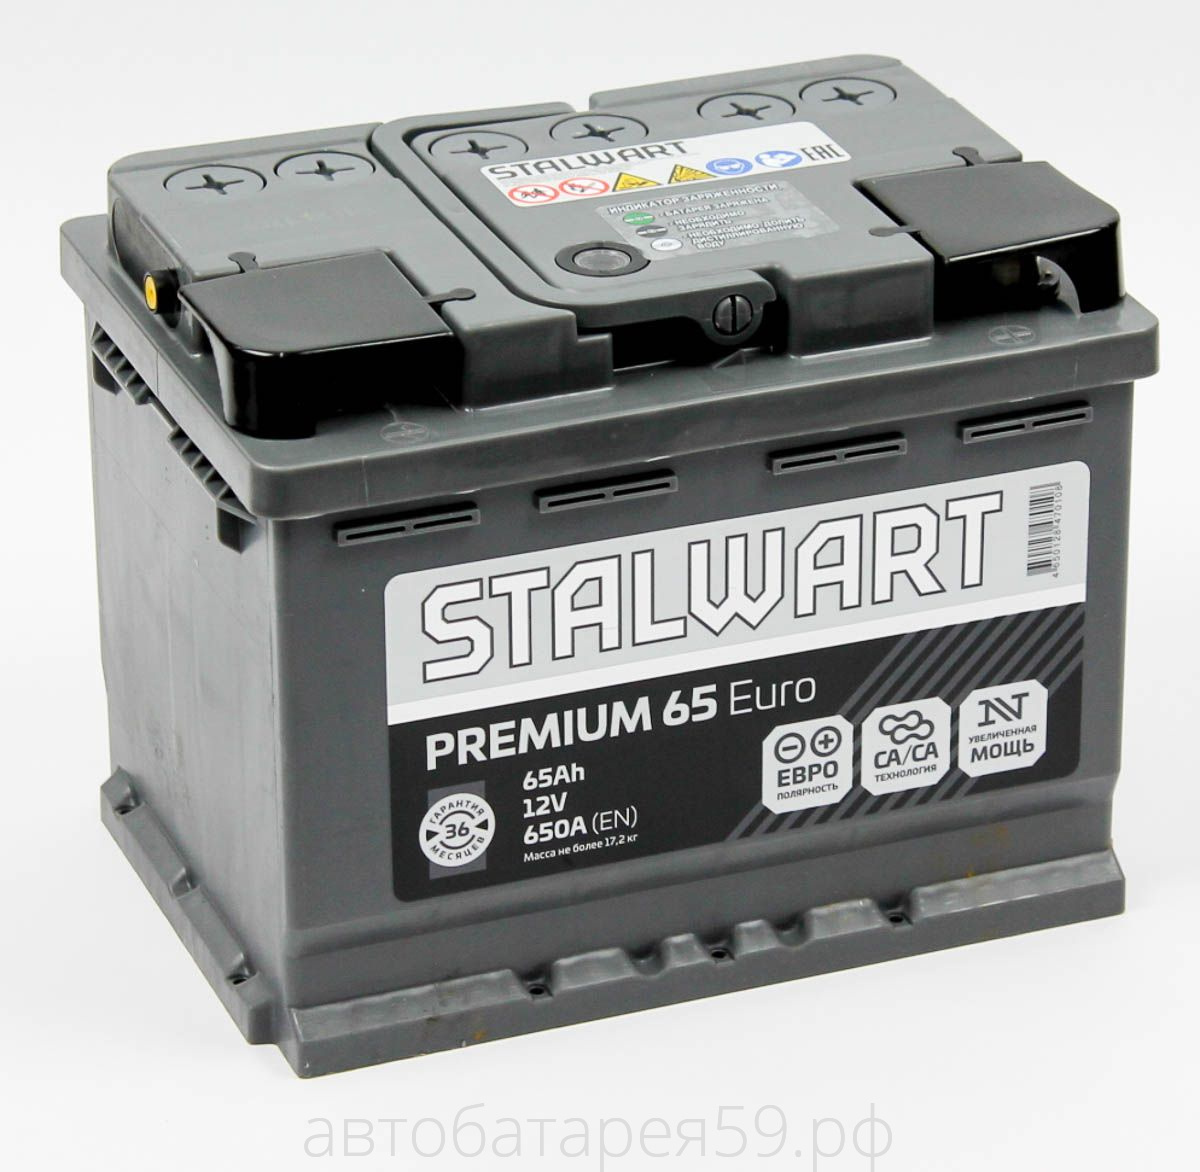 аккумулятор stalwart 65 о.п. премиум 